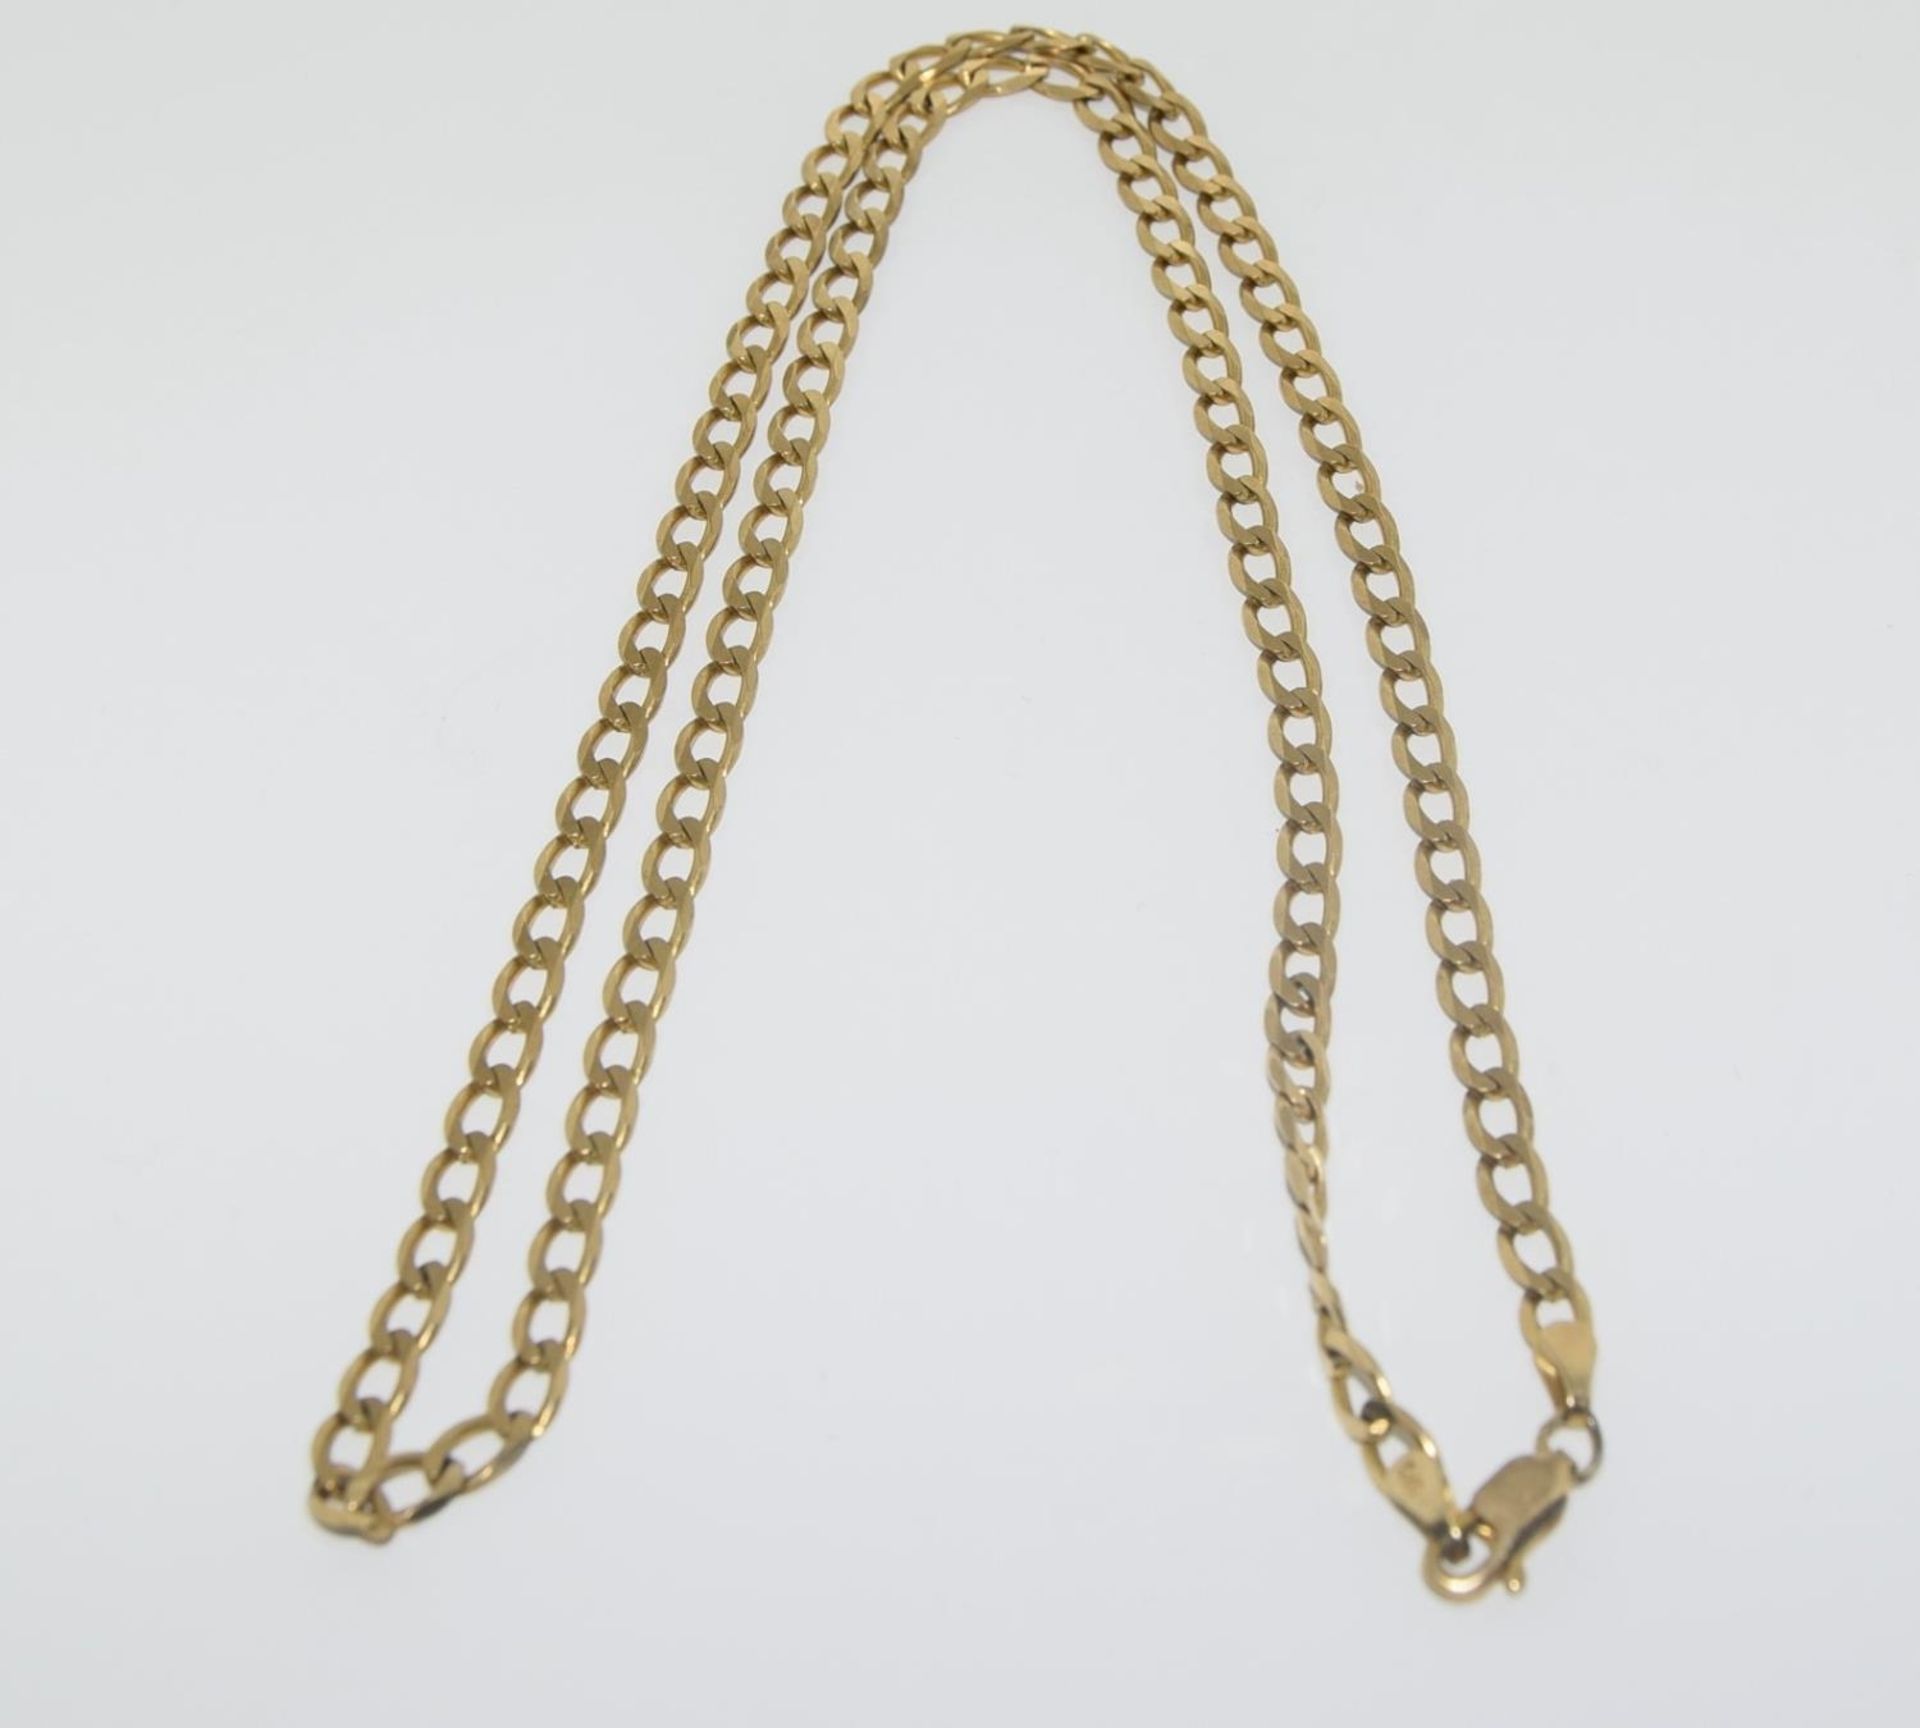 9ct gold flatlink chain 52cm long 10gm - Image 4 of 5